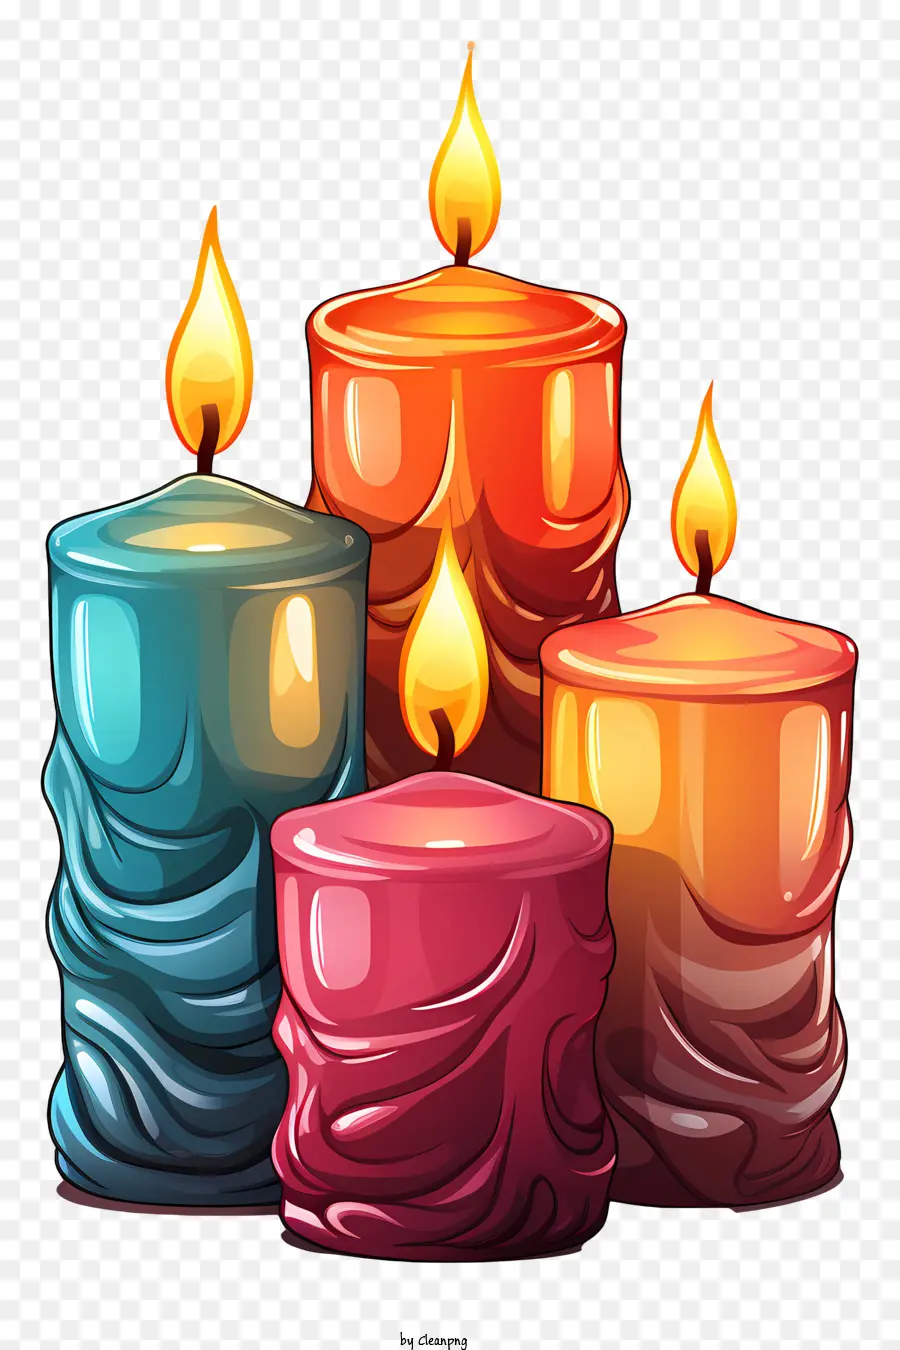 Kerzenlicht farbenfrohe Kerzen rot blaue Orangenkerzen - Drei bunte Kerzen mit flackernden Flammen auf Schwarz